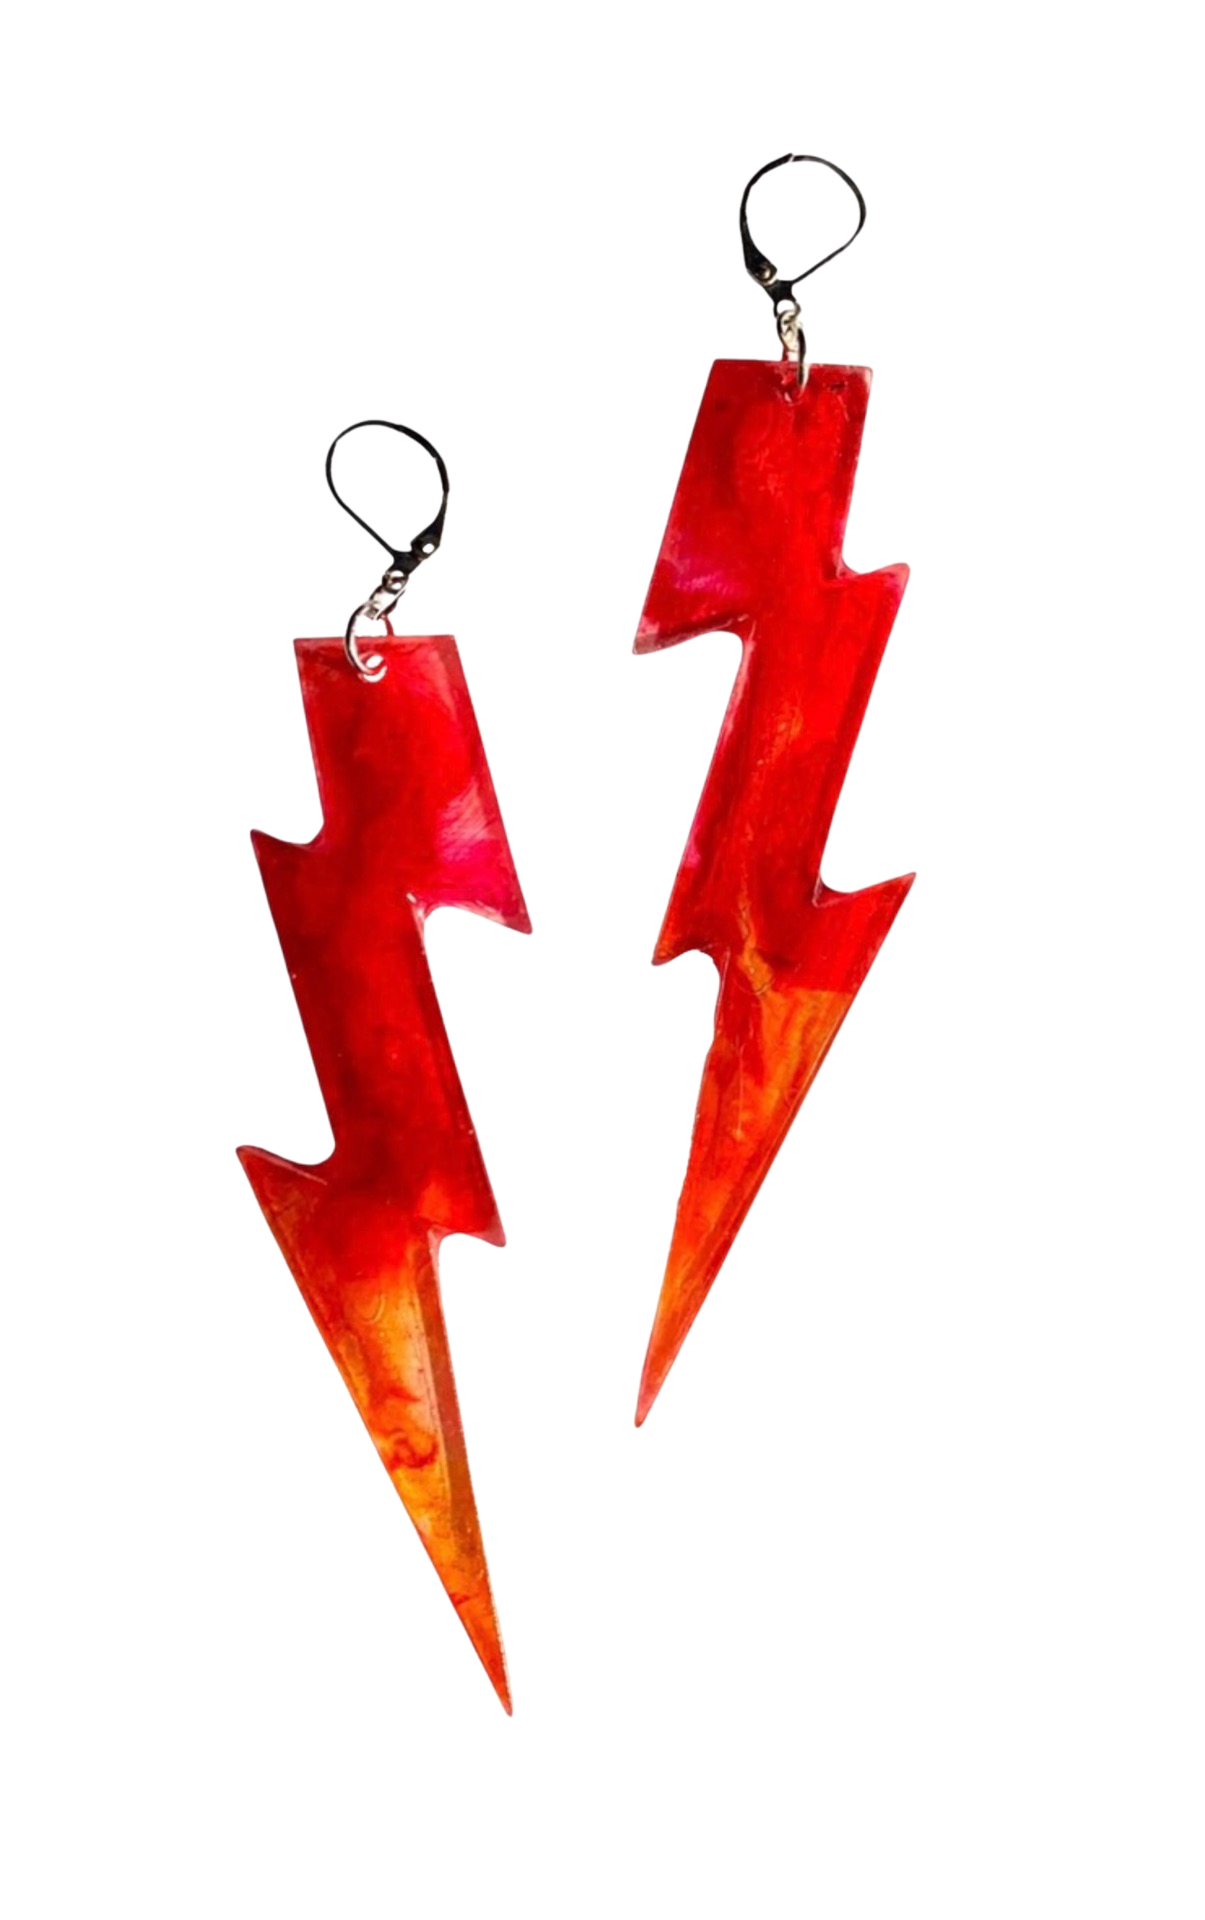 Flames Lightning Bolt Earrings, Fire, 4” statement earrings - Discontinued